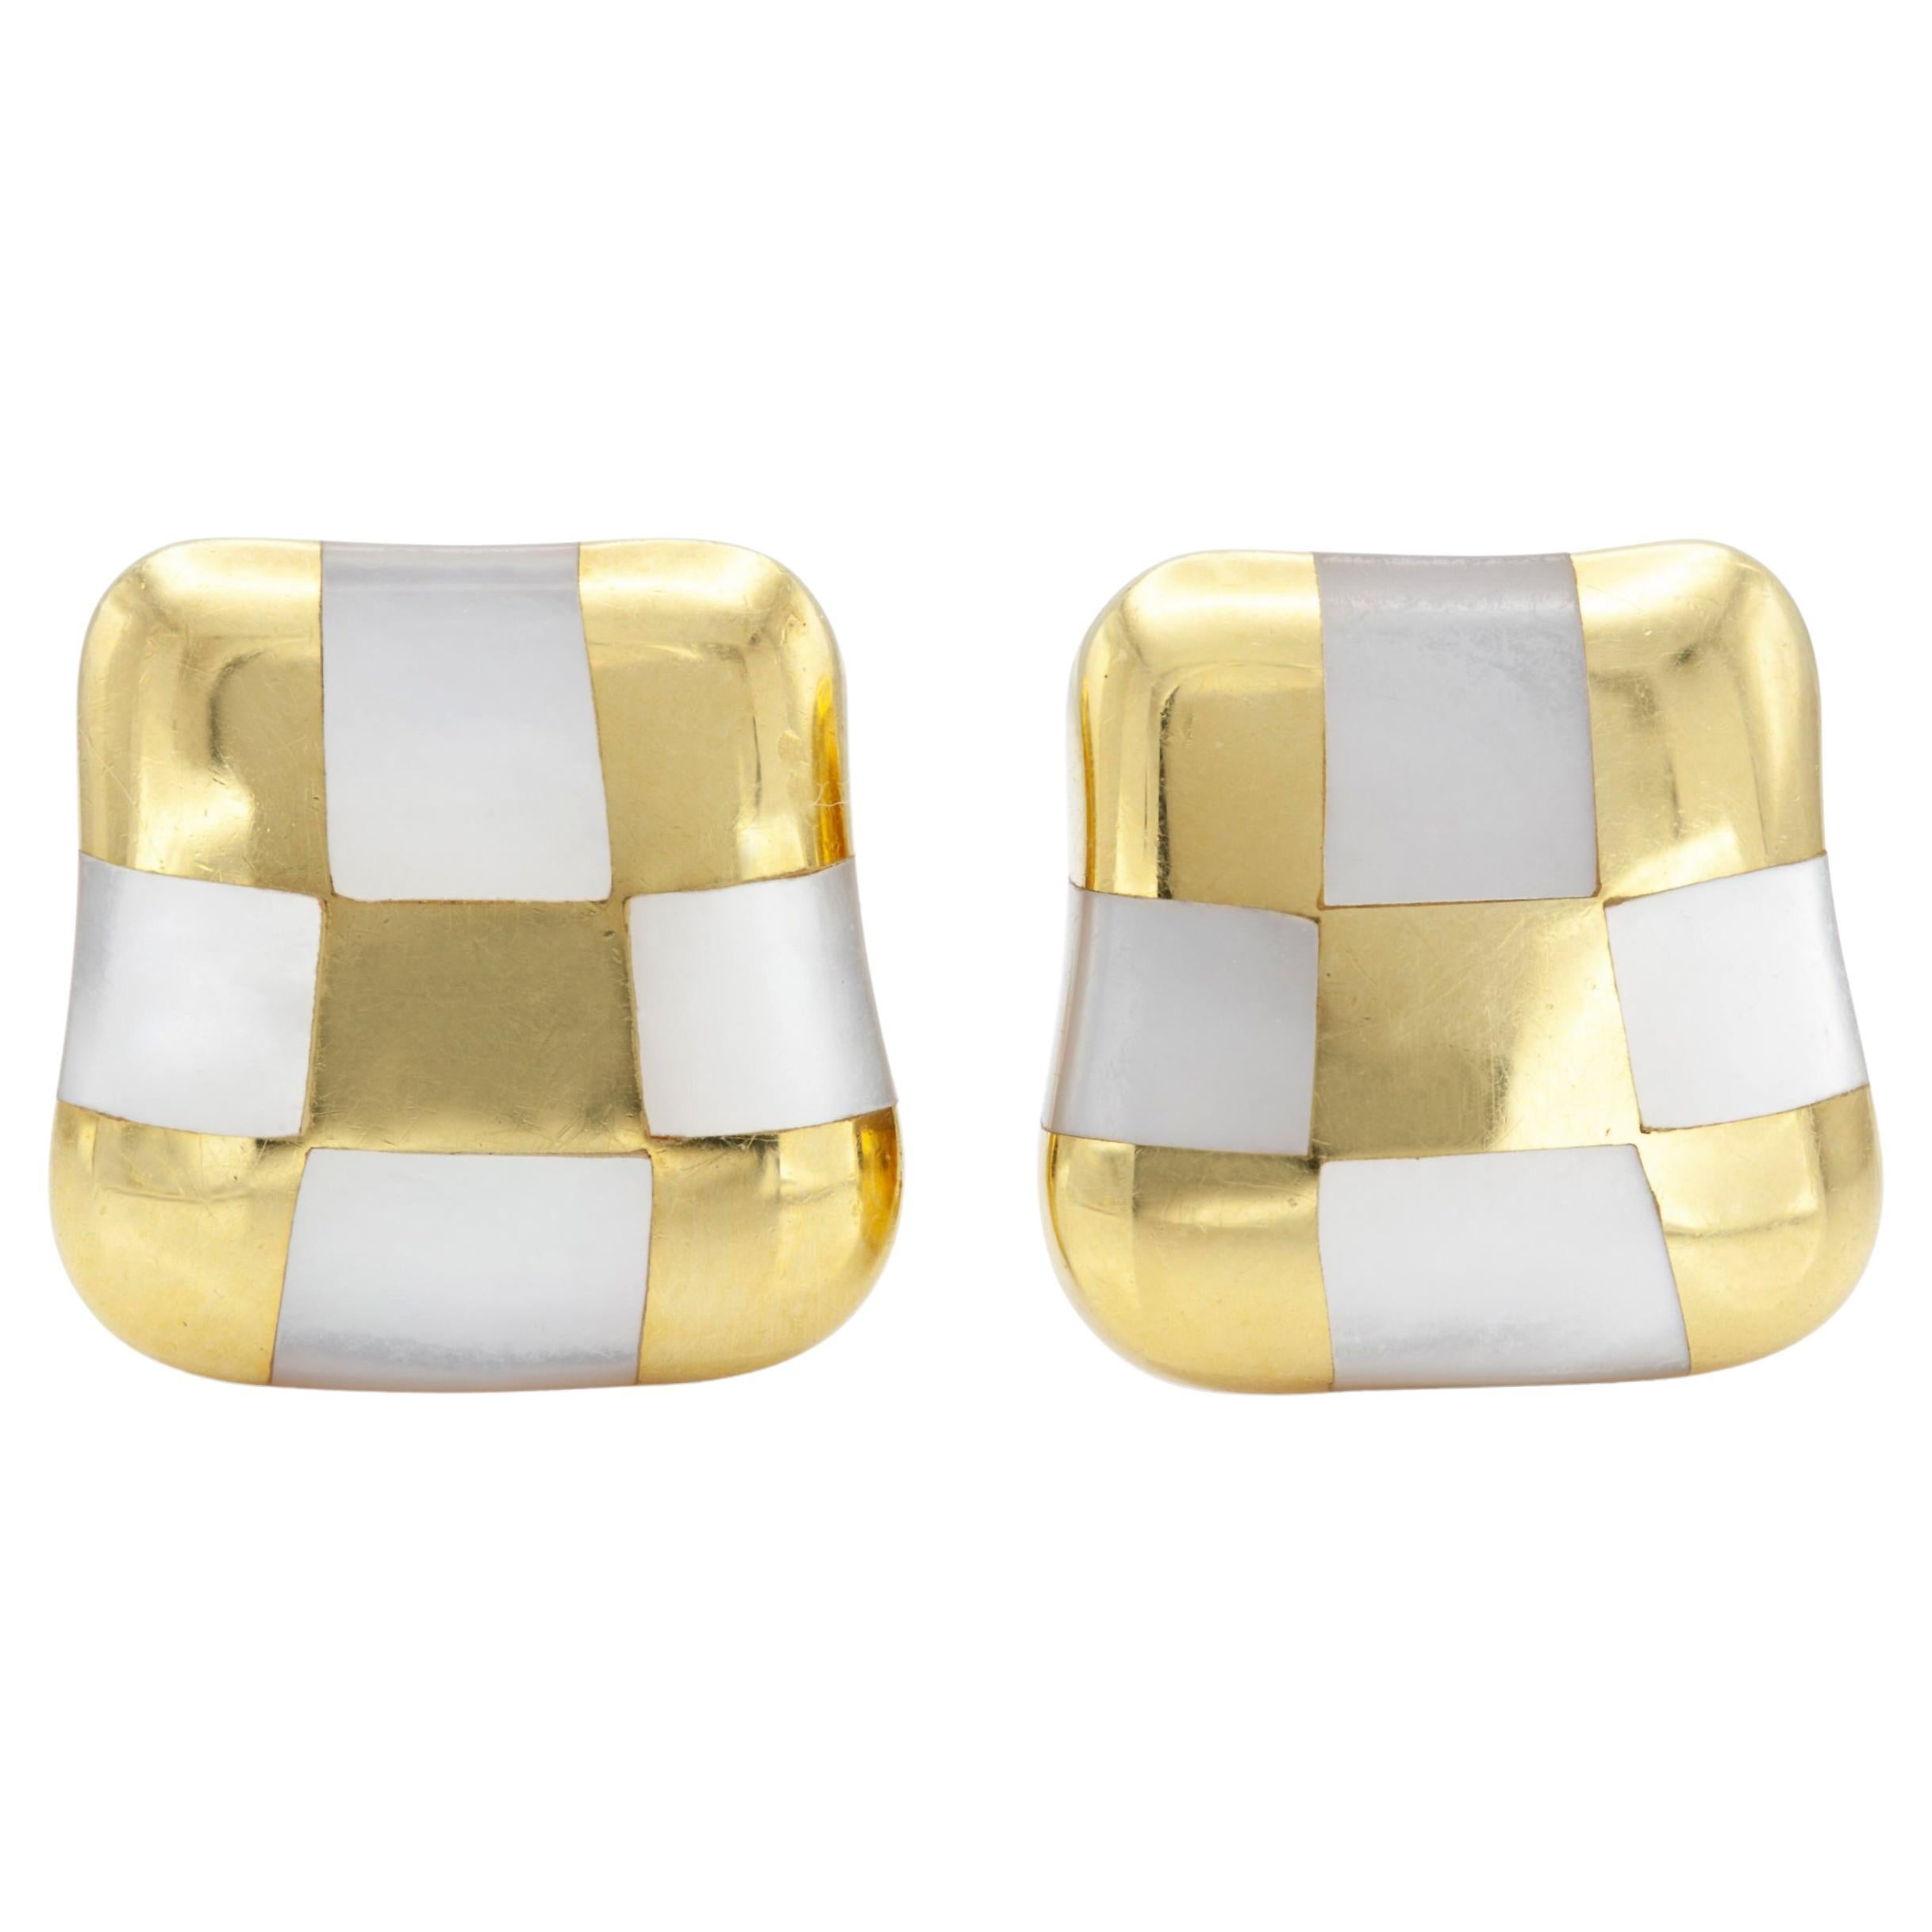 Tiffany & Co. Angela Cummings Gold- und Perlmutt-Ohrringe mit Karomuster